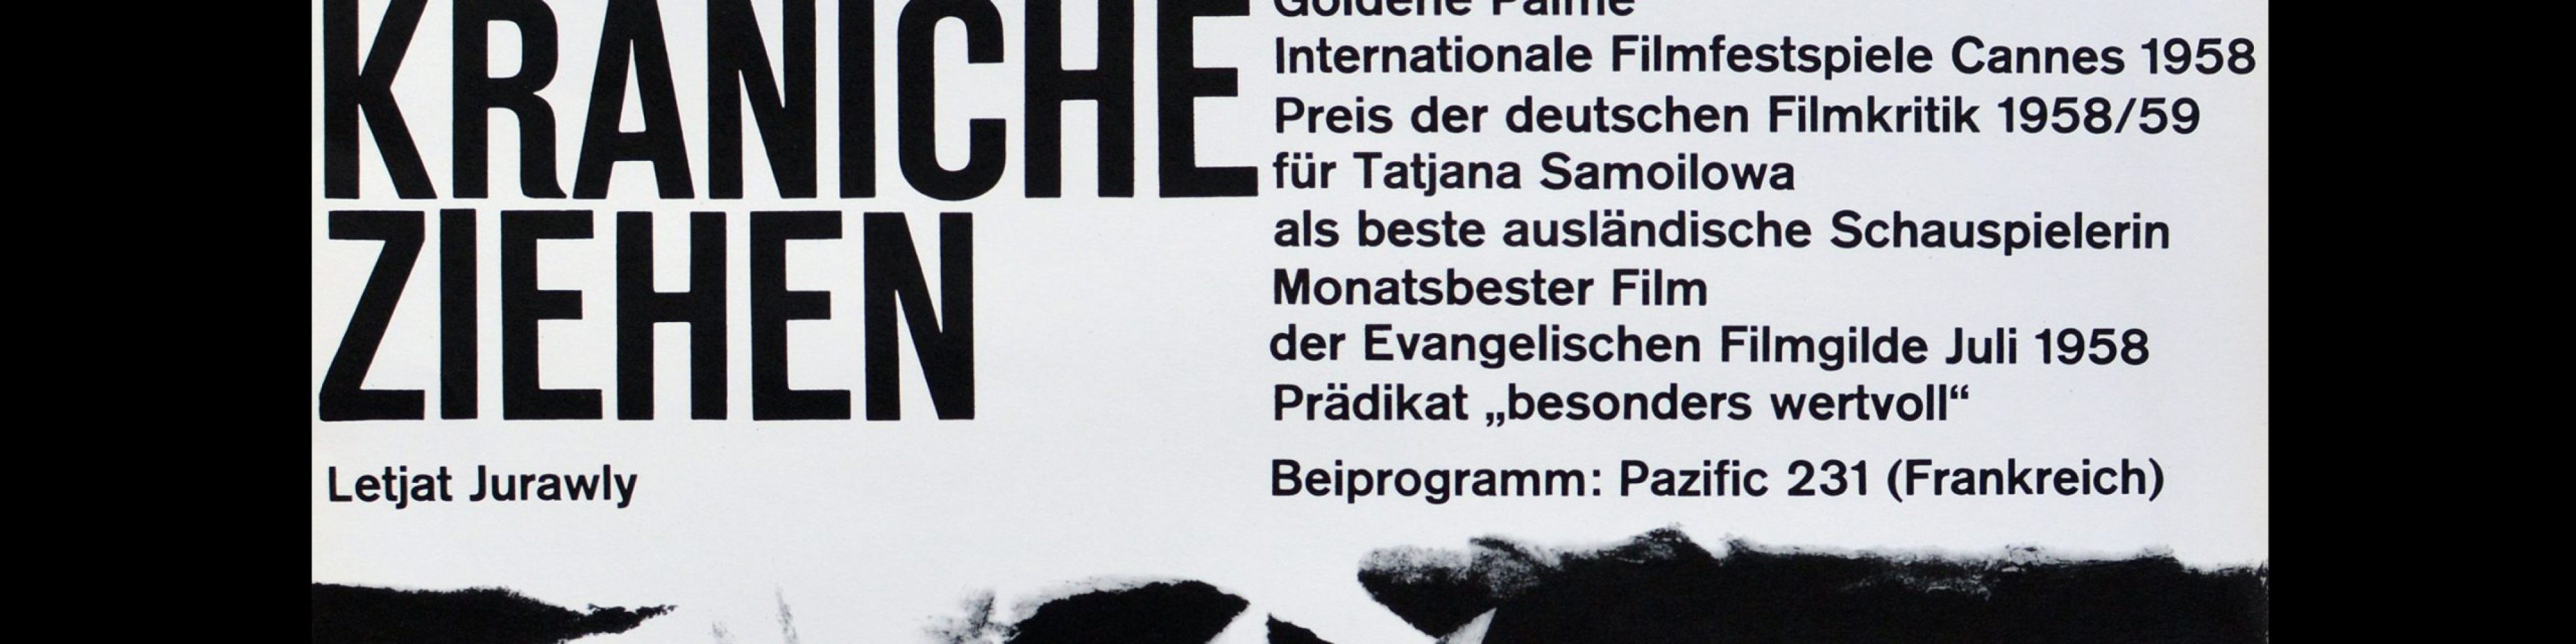 Wenn Die Kraniche Ziehen, Atlas Films Poster, 1960s. Designed by Karl Oskar Blase